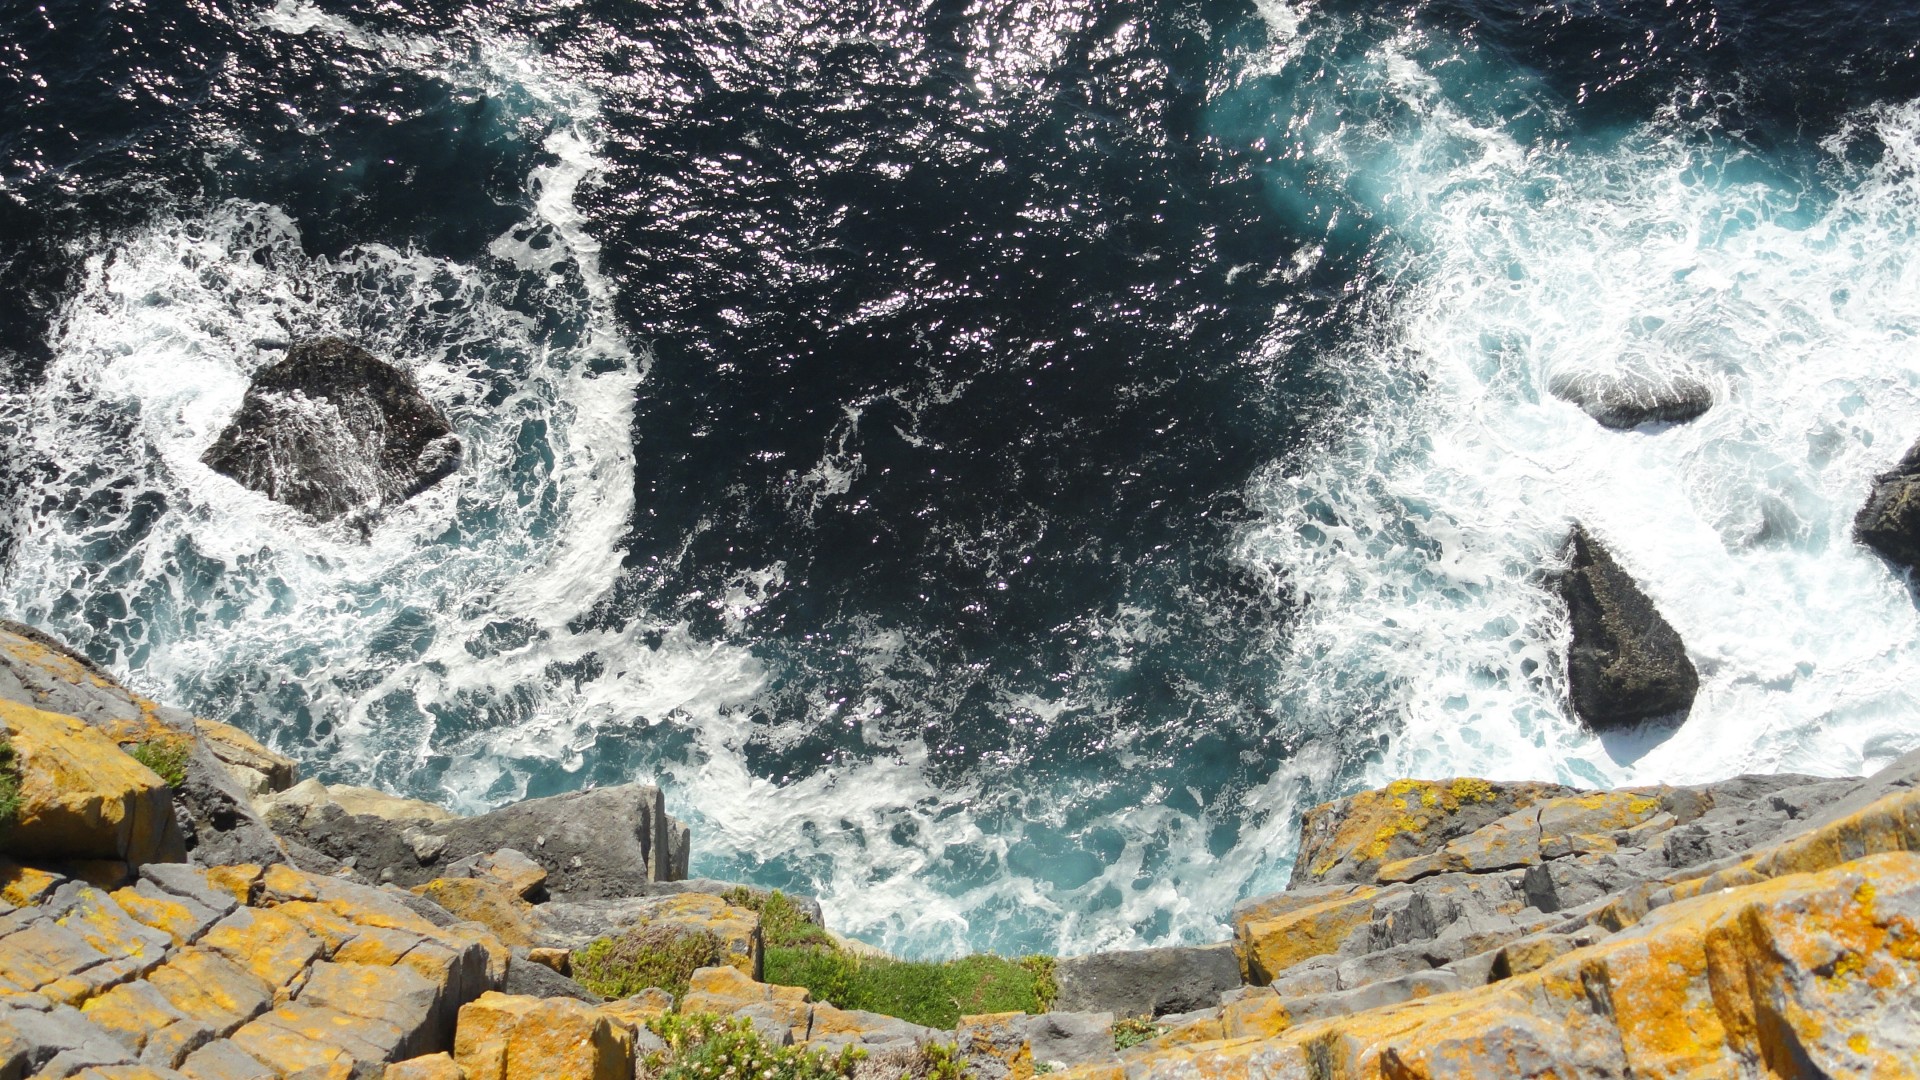 ирландия, 5k, 4k, скалы, пейзаж, море, океан, вода, камни, синий, природа, Ireland, 5k, 4k wallpaper, cliffs, landscape, Sea, ocean, water, rocks, blue, nature (horizontal)